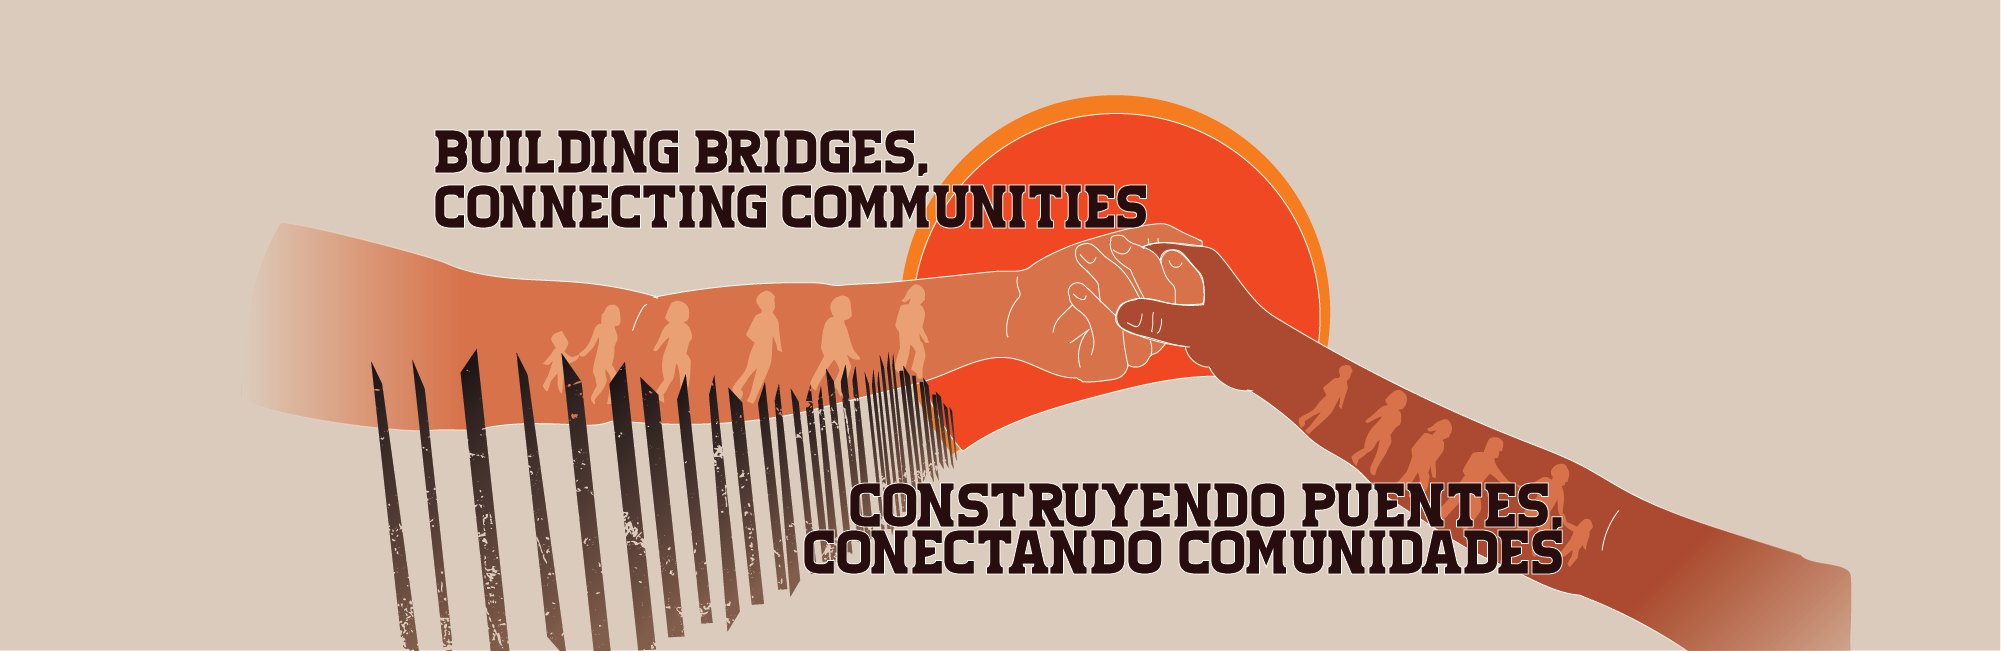 Building Bridges Connecting Communities Annual Event